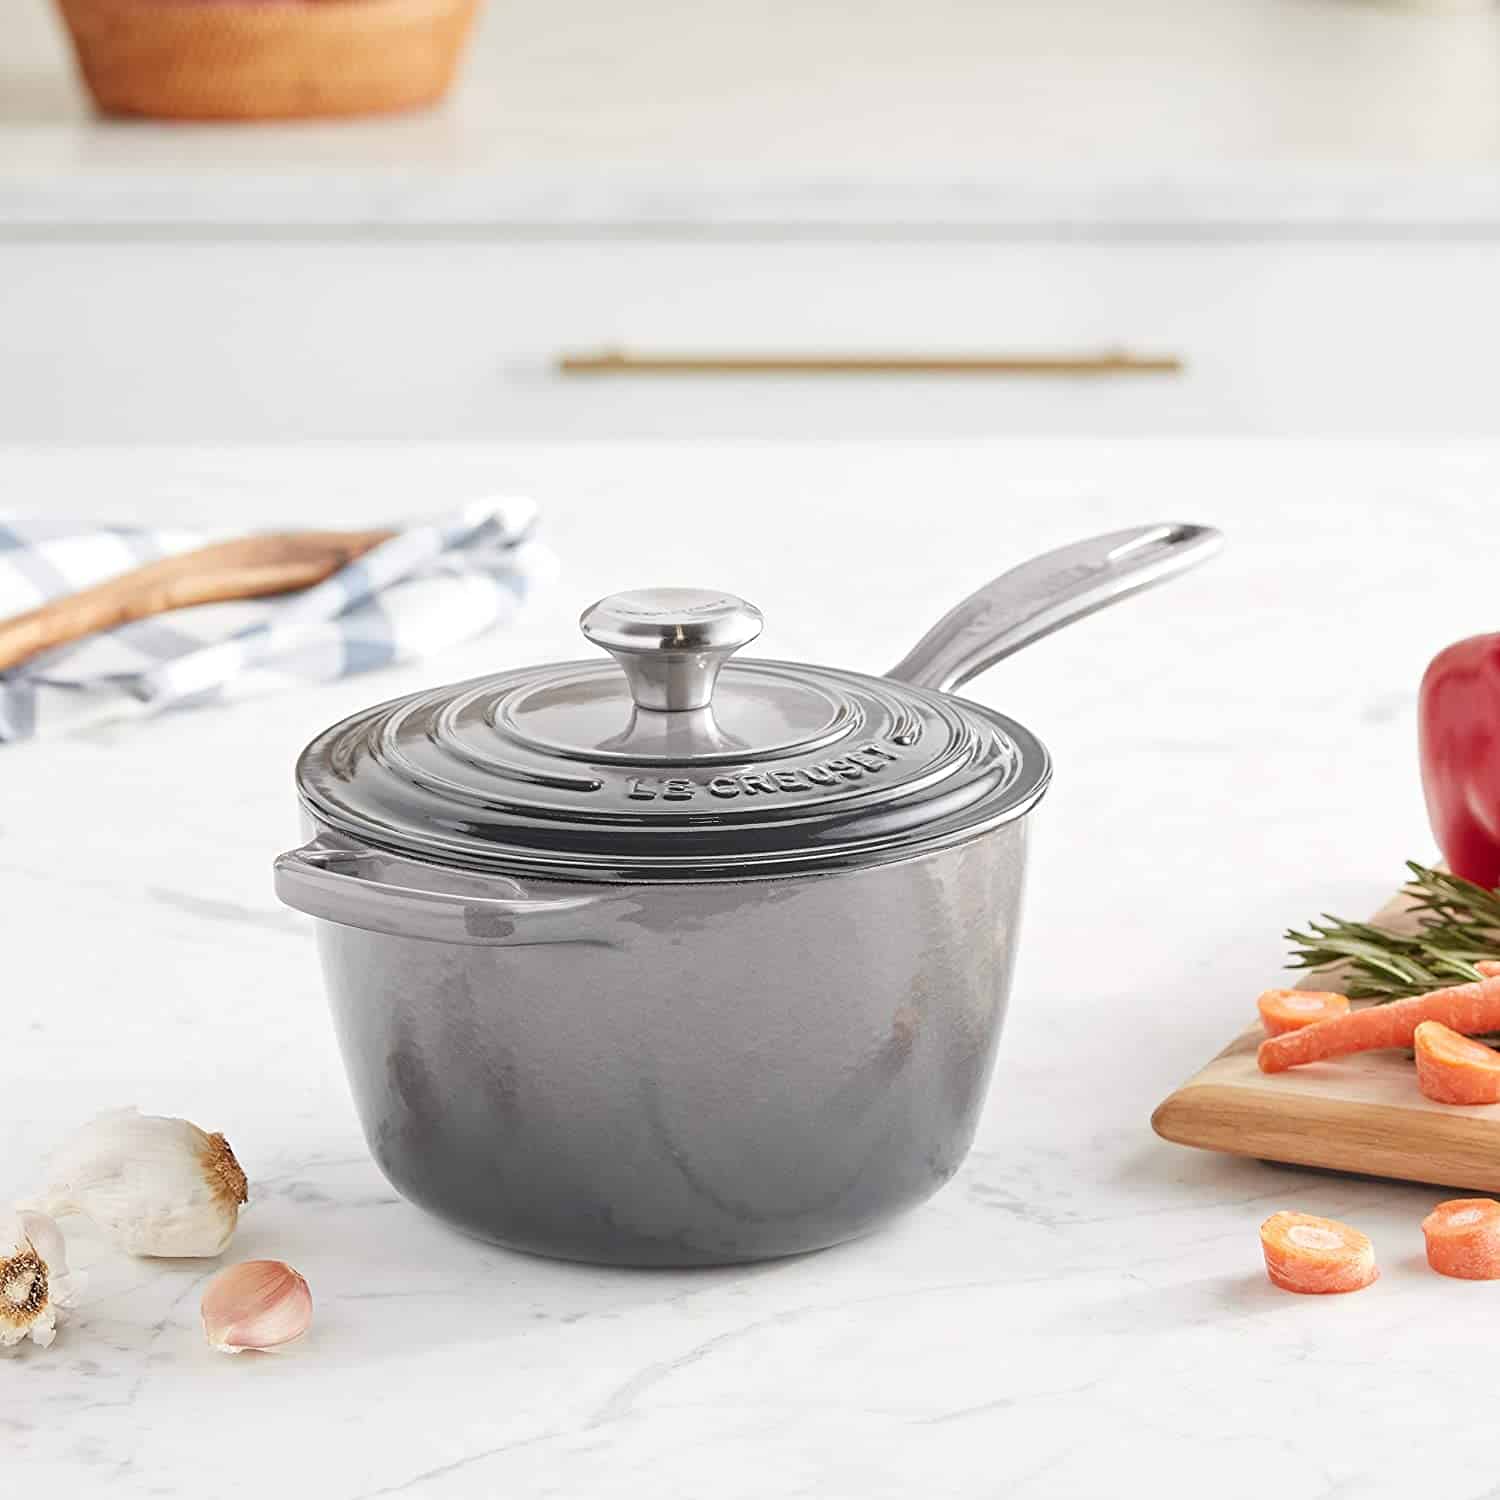 Best premium & cast iron saucepan for cooking rice- Le Creuset Enameled Cast Iron Signature